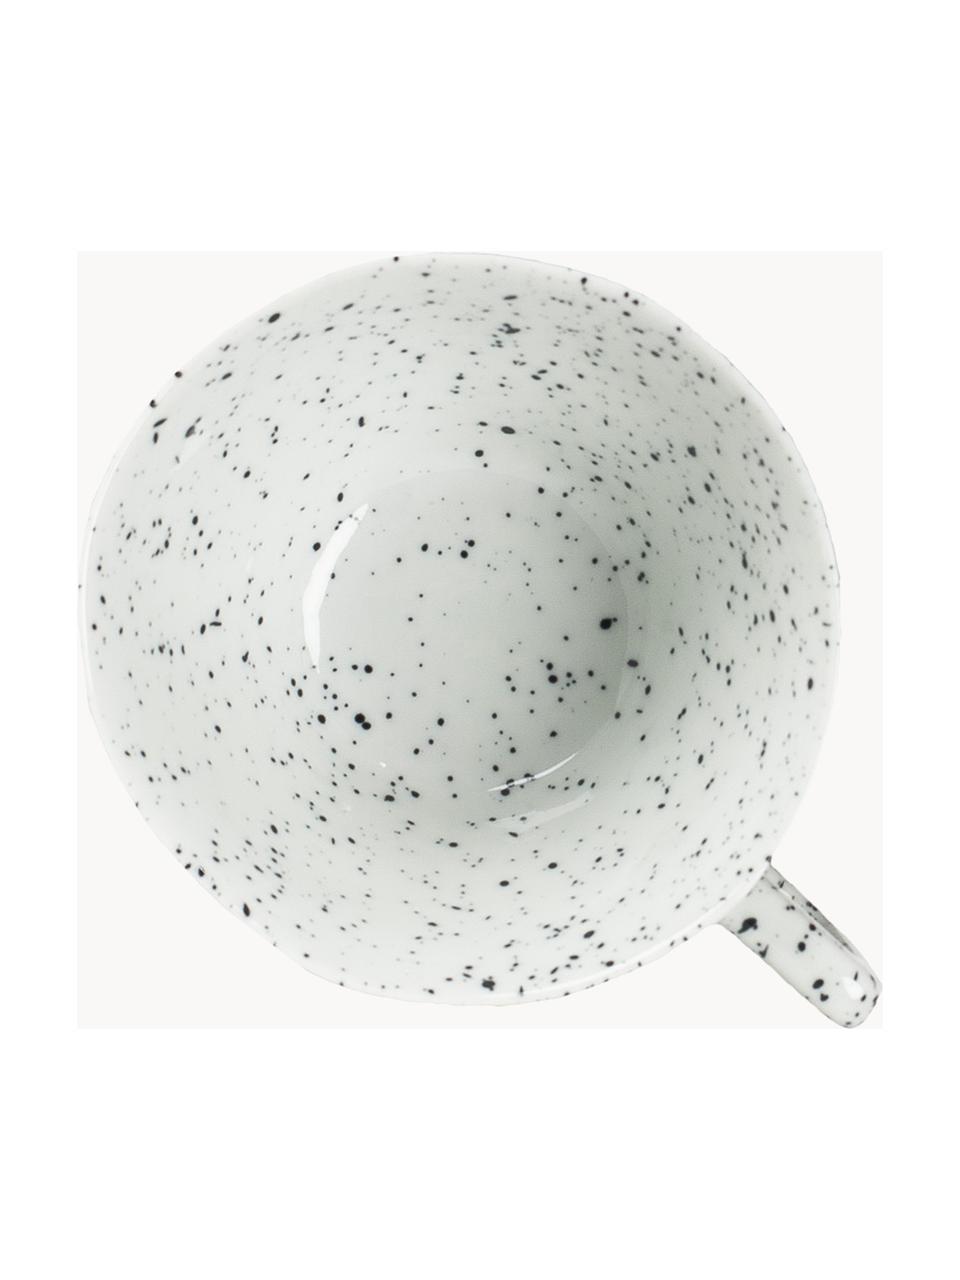 Porzellan-Tasse Poppi, 2 Stück, Porzellan, Weiss, schwarz gesprenkelt, Ø 11 x H 6 cm, 230 ml